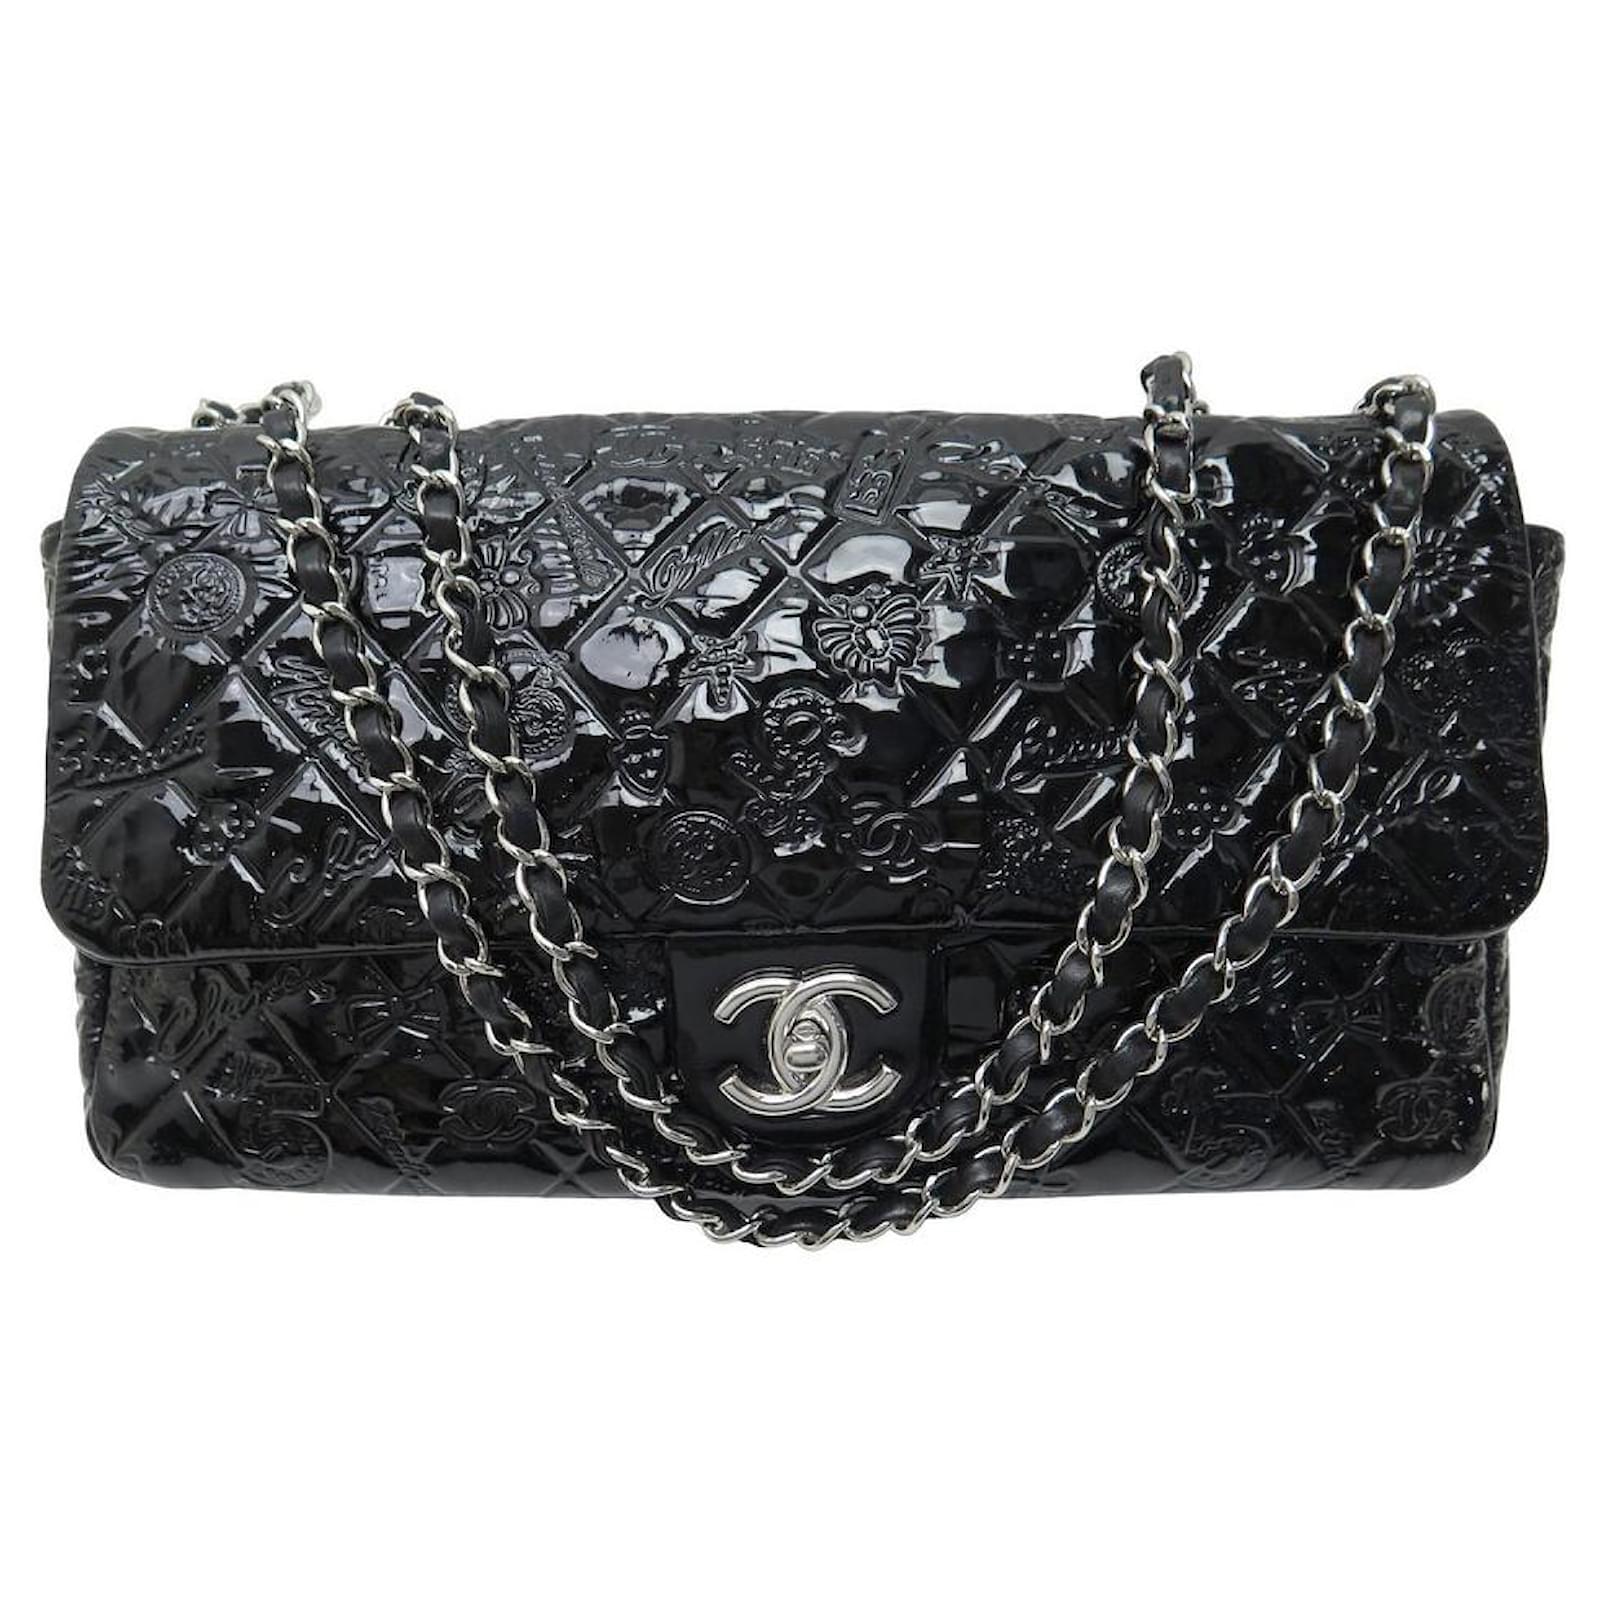 Handbags Chanel Chanel Timeless Coco Jumbo Patent Leather HANDBAG49748 Lucky Charms Purse